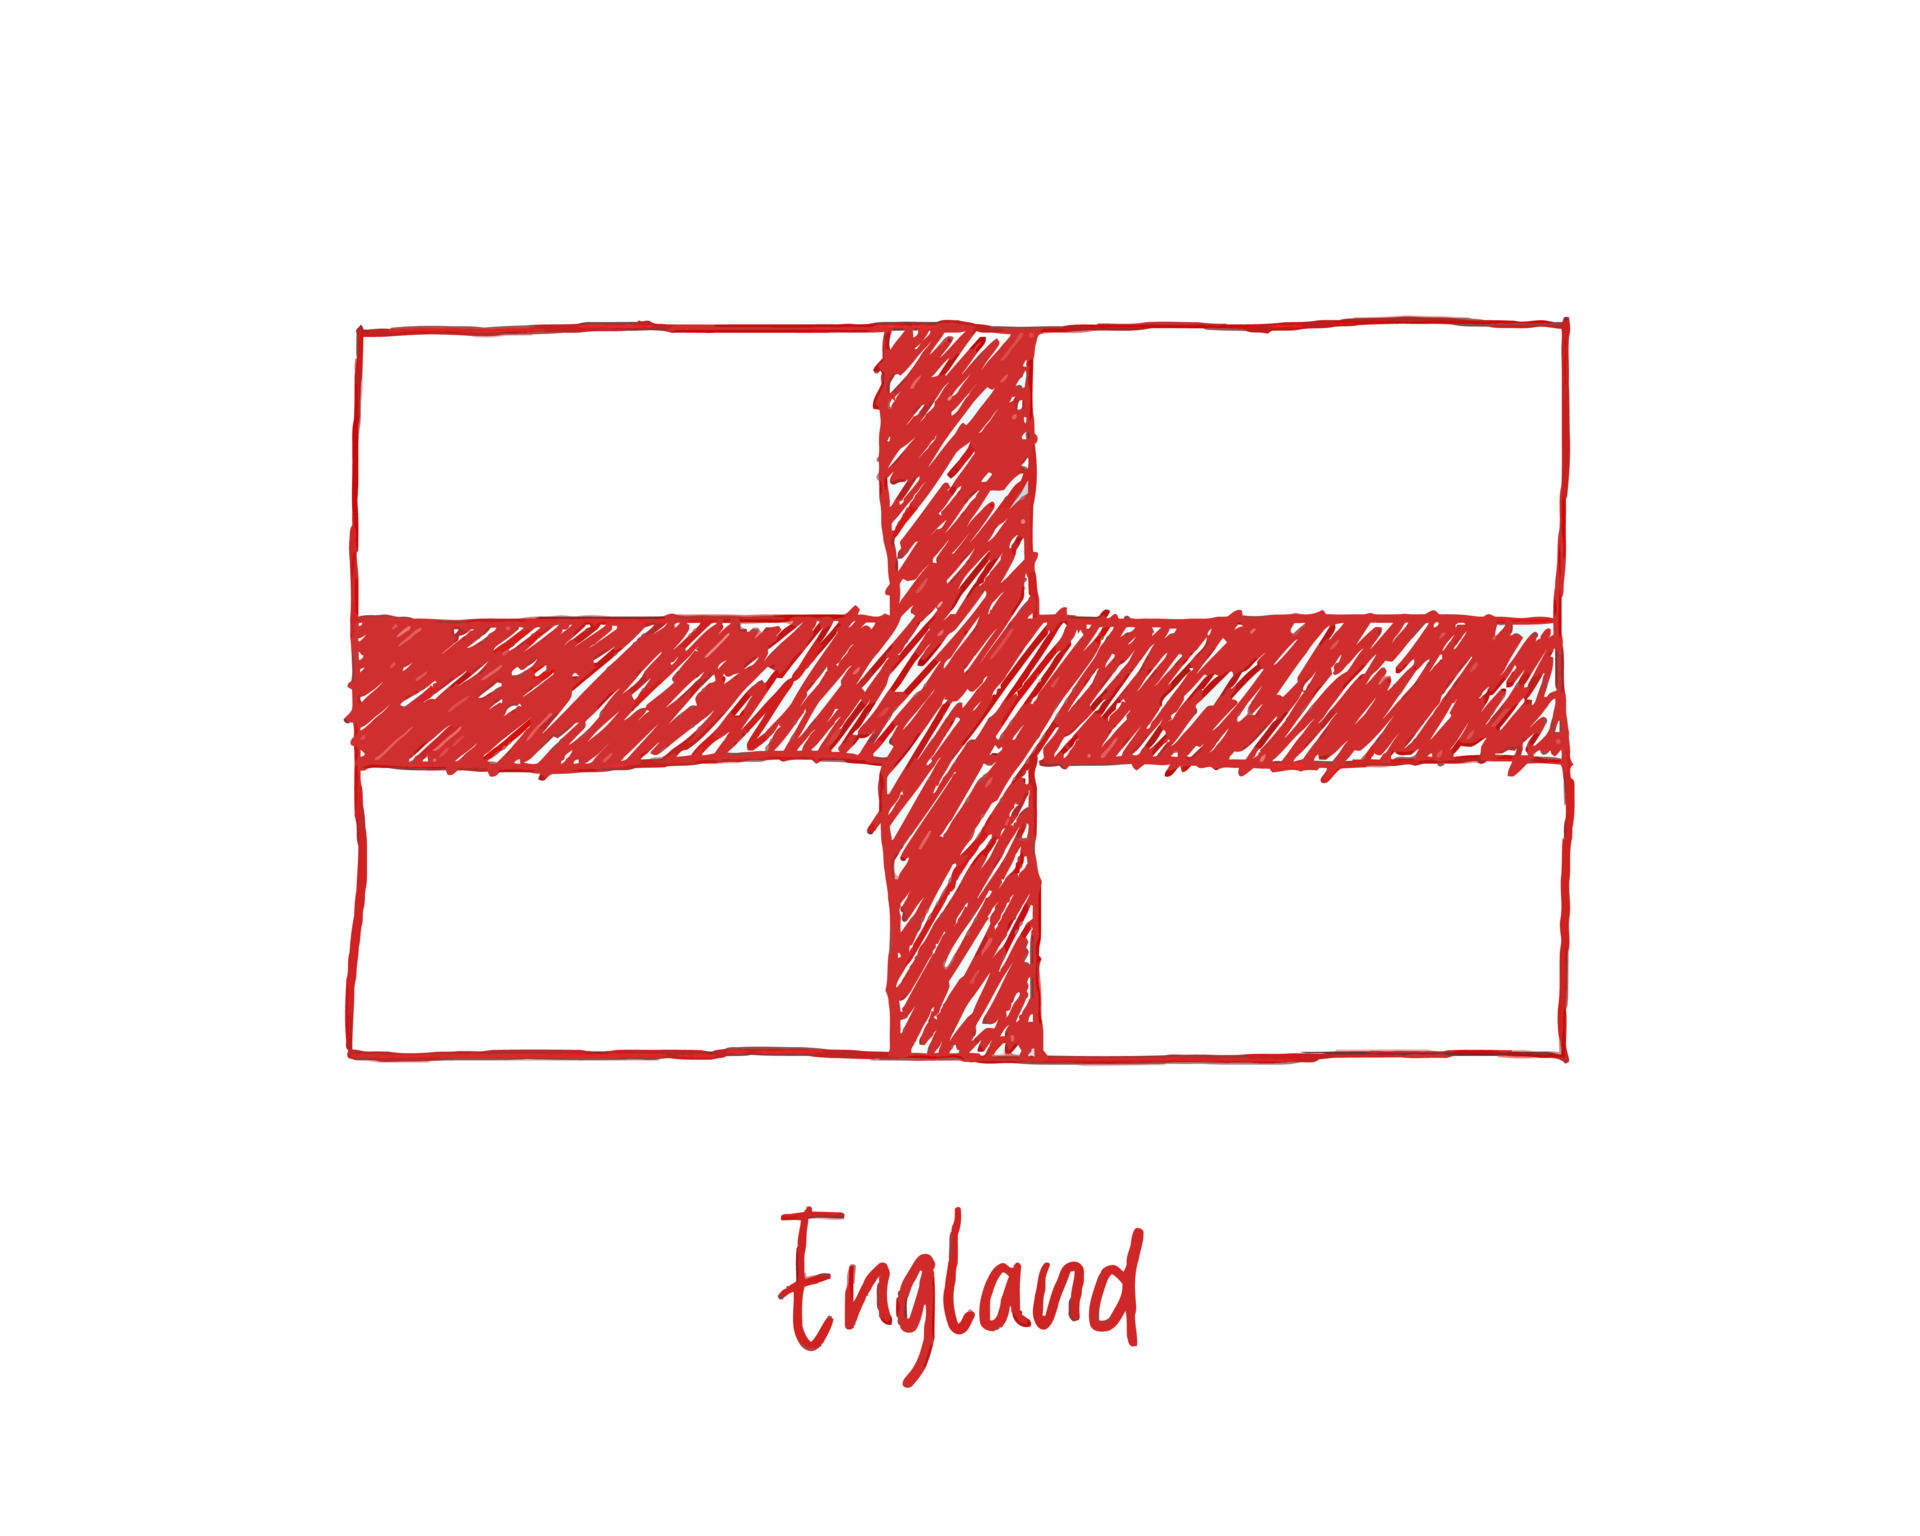 Emblazoned Pride - Artistic Representation Of The England Flag Background